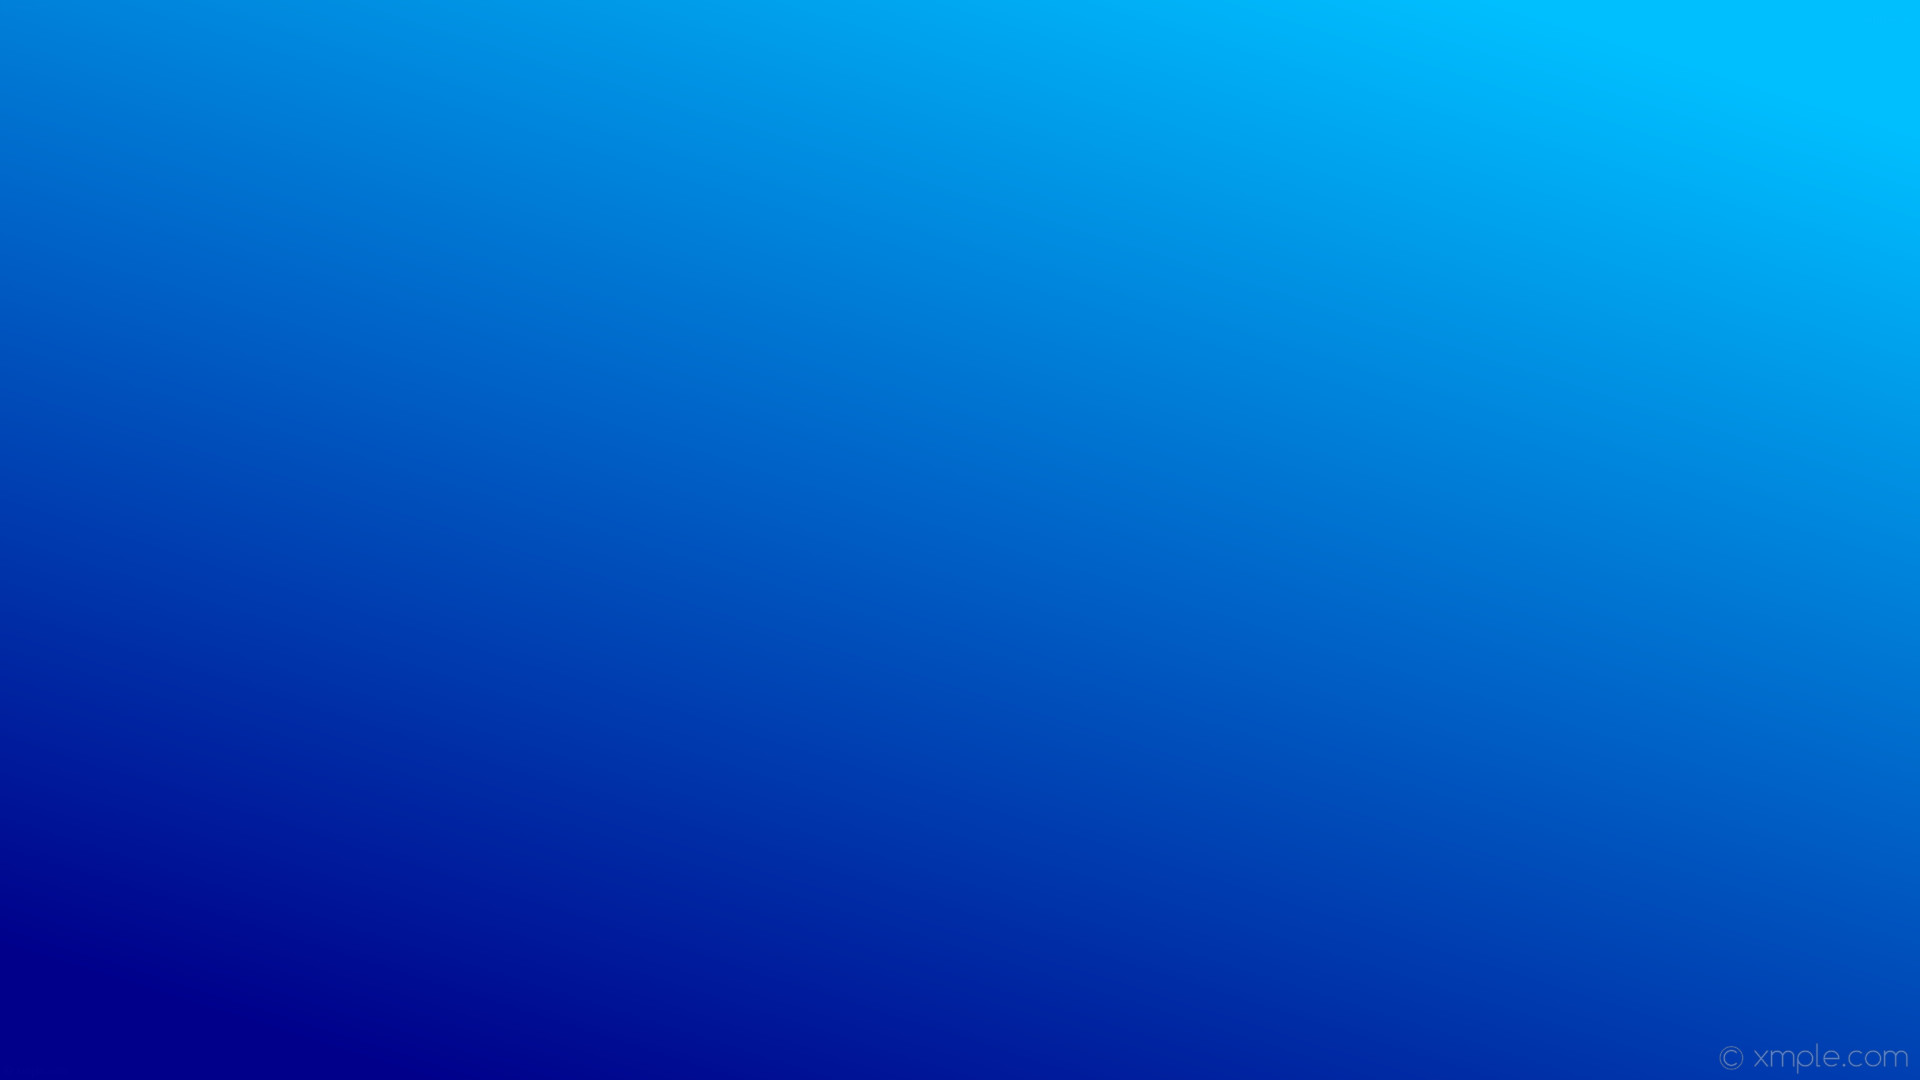 1920x1080 wallpaper linear blue gradient dark blue deep sky blue #00008b #00bfff 225Â°